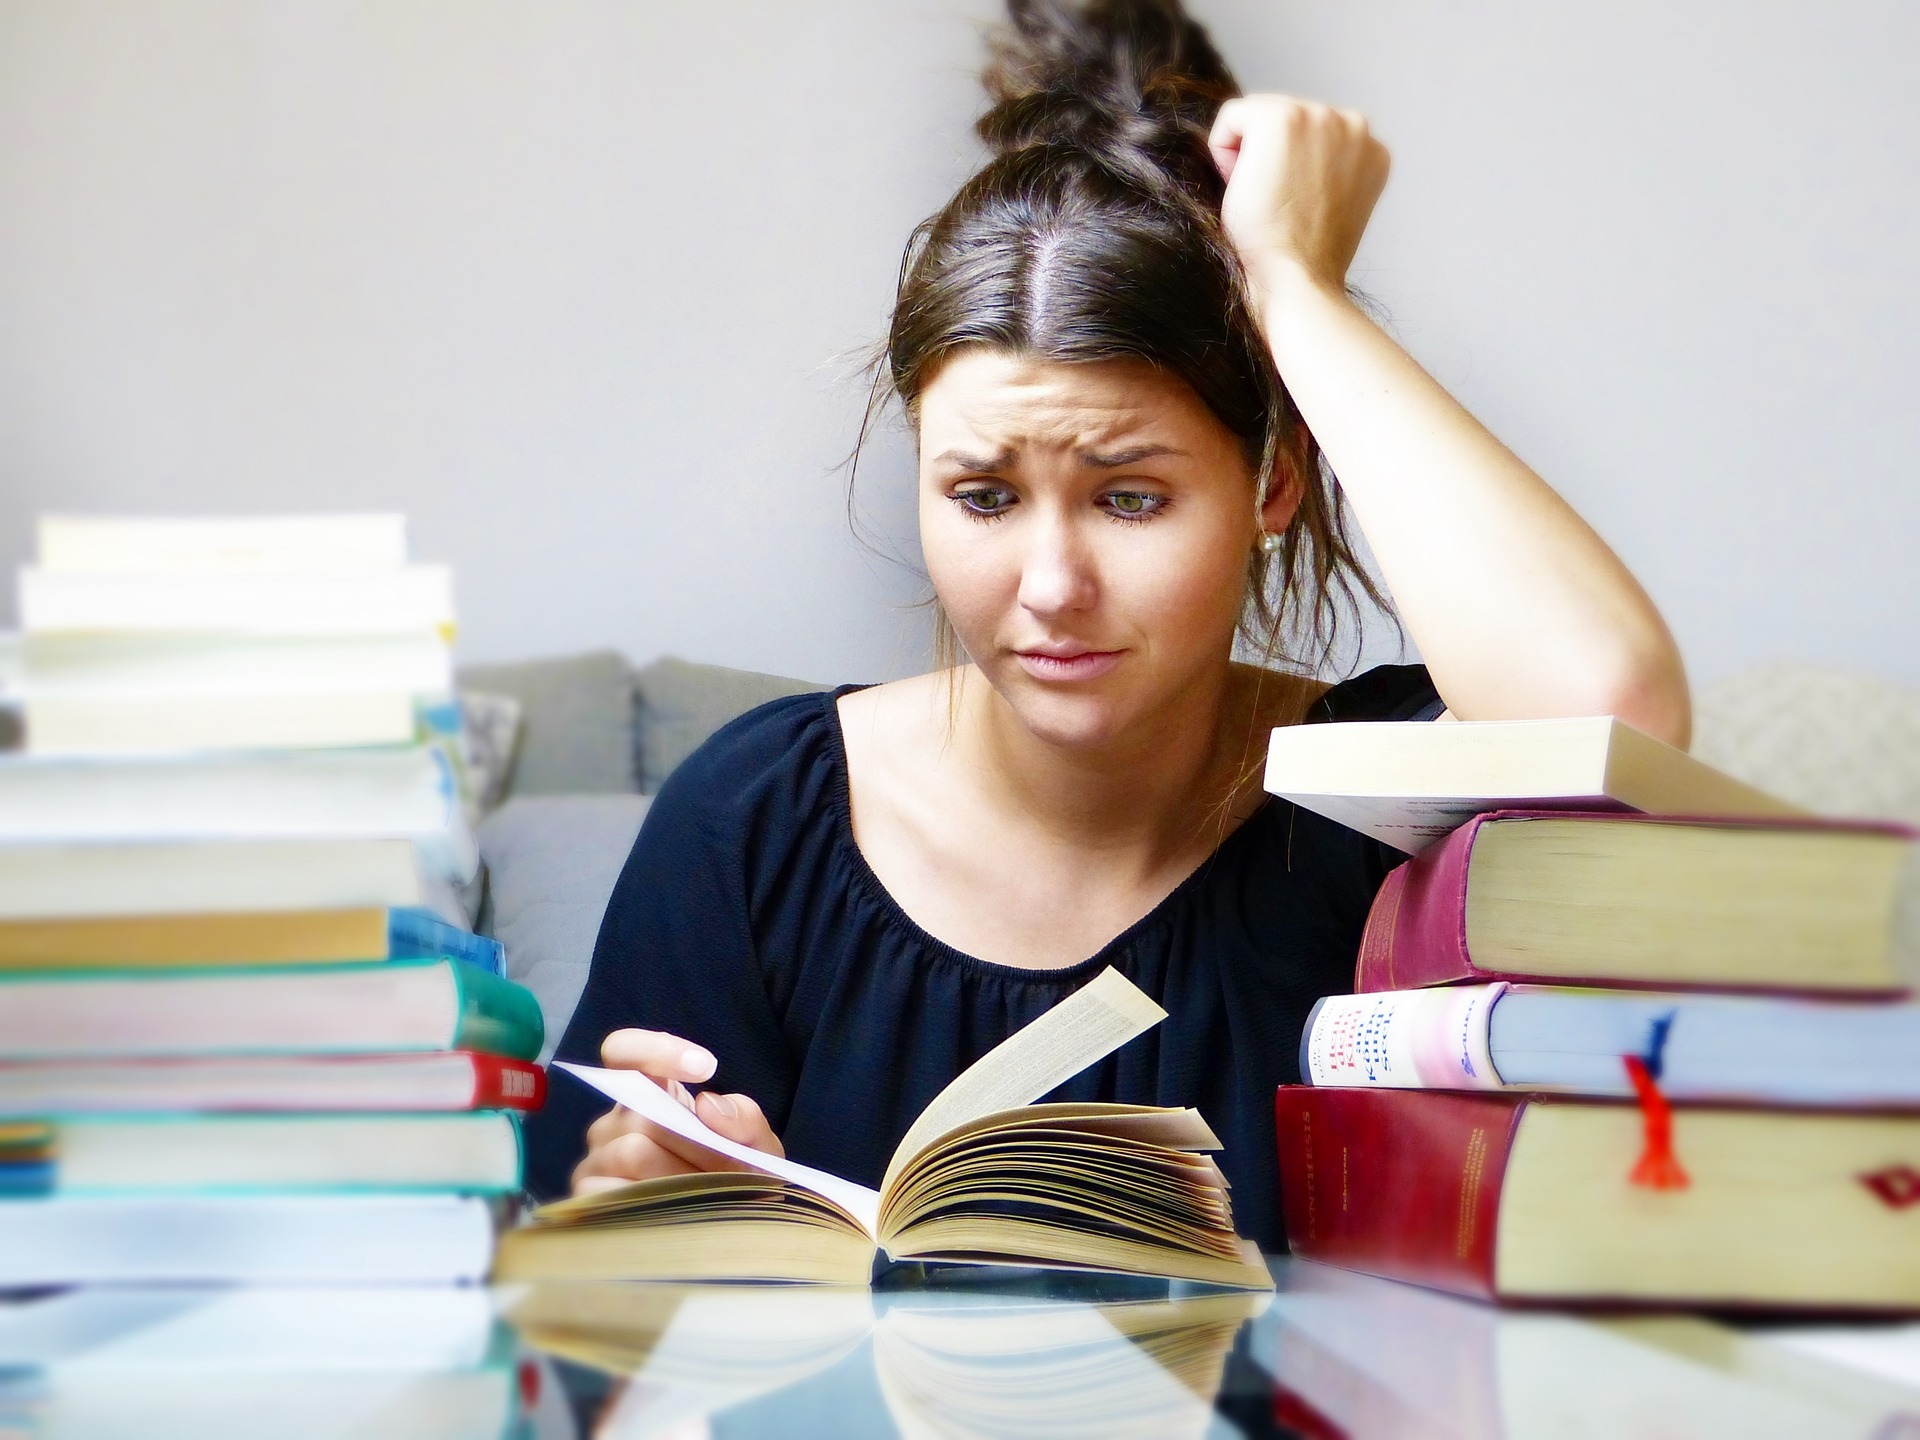 homework causes stress study